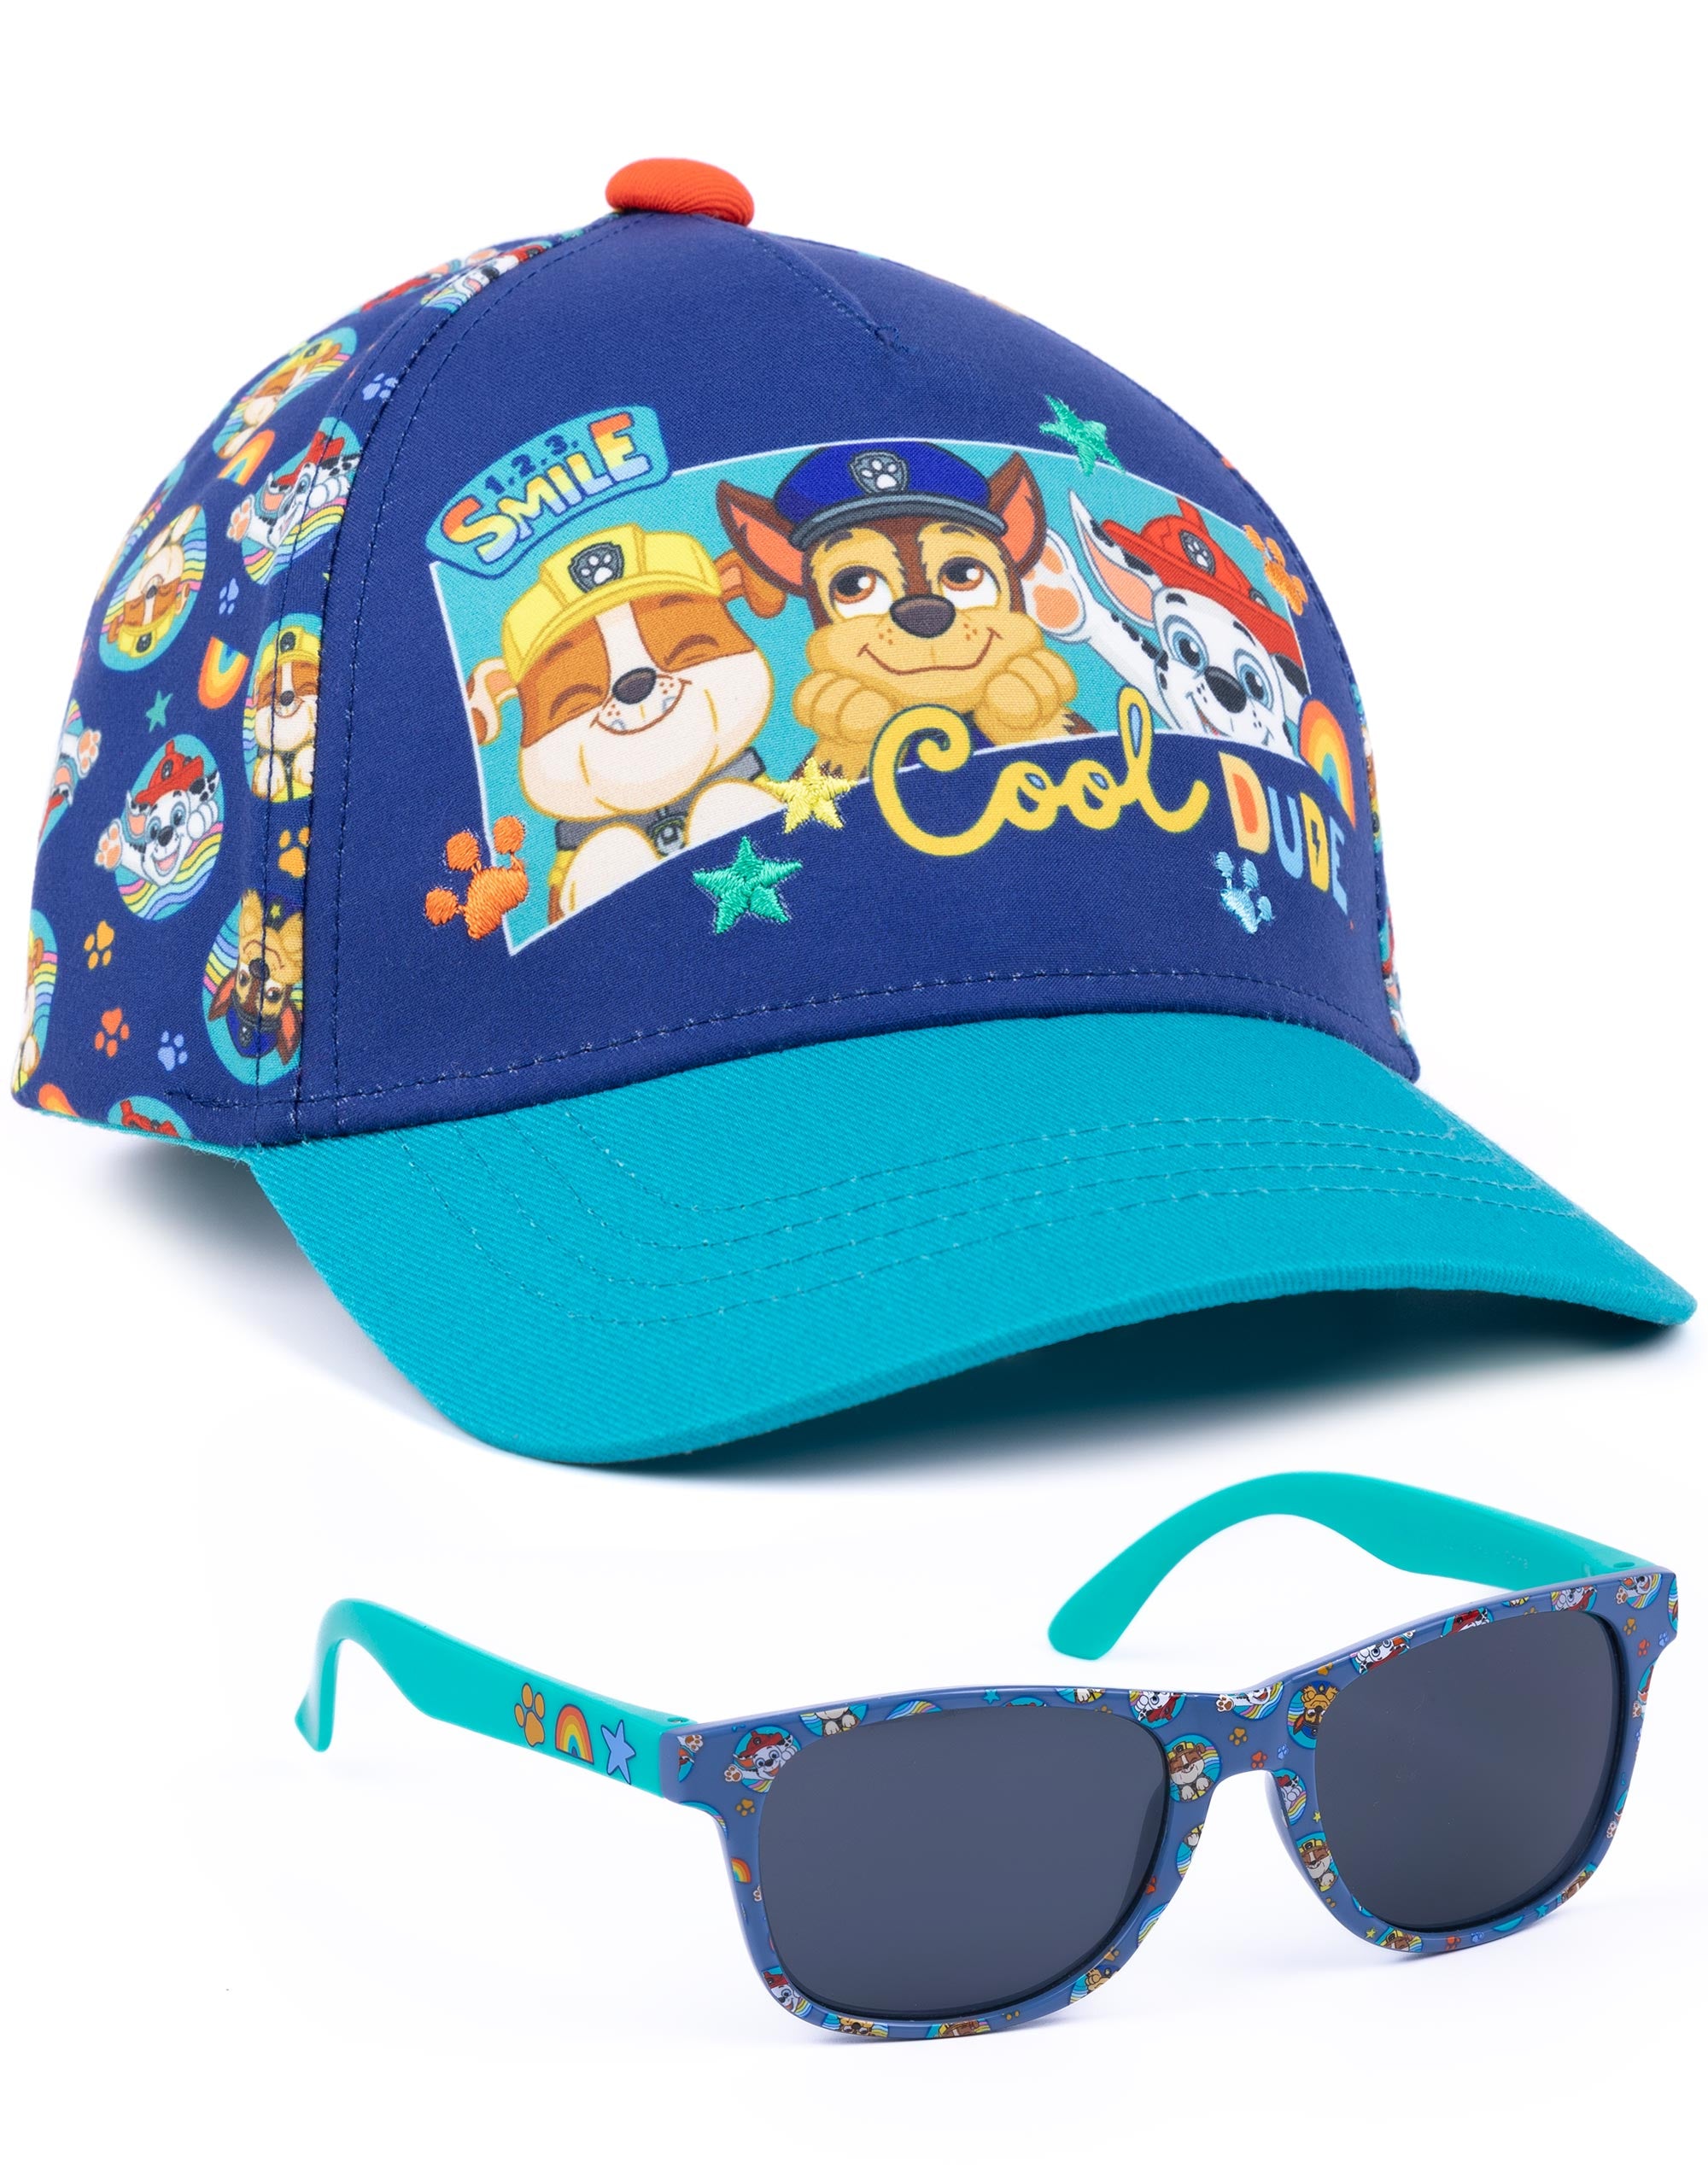 PAW Patrol Cap and Sunglasses